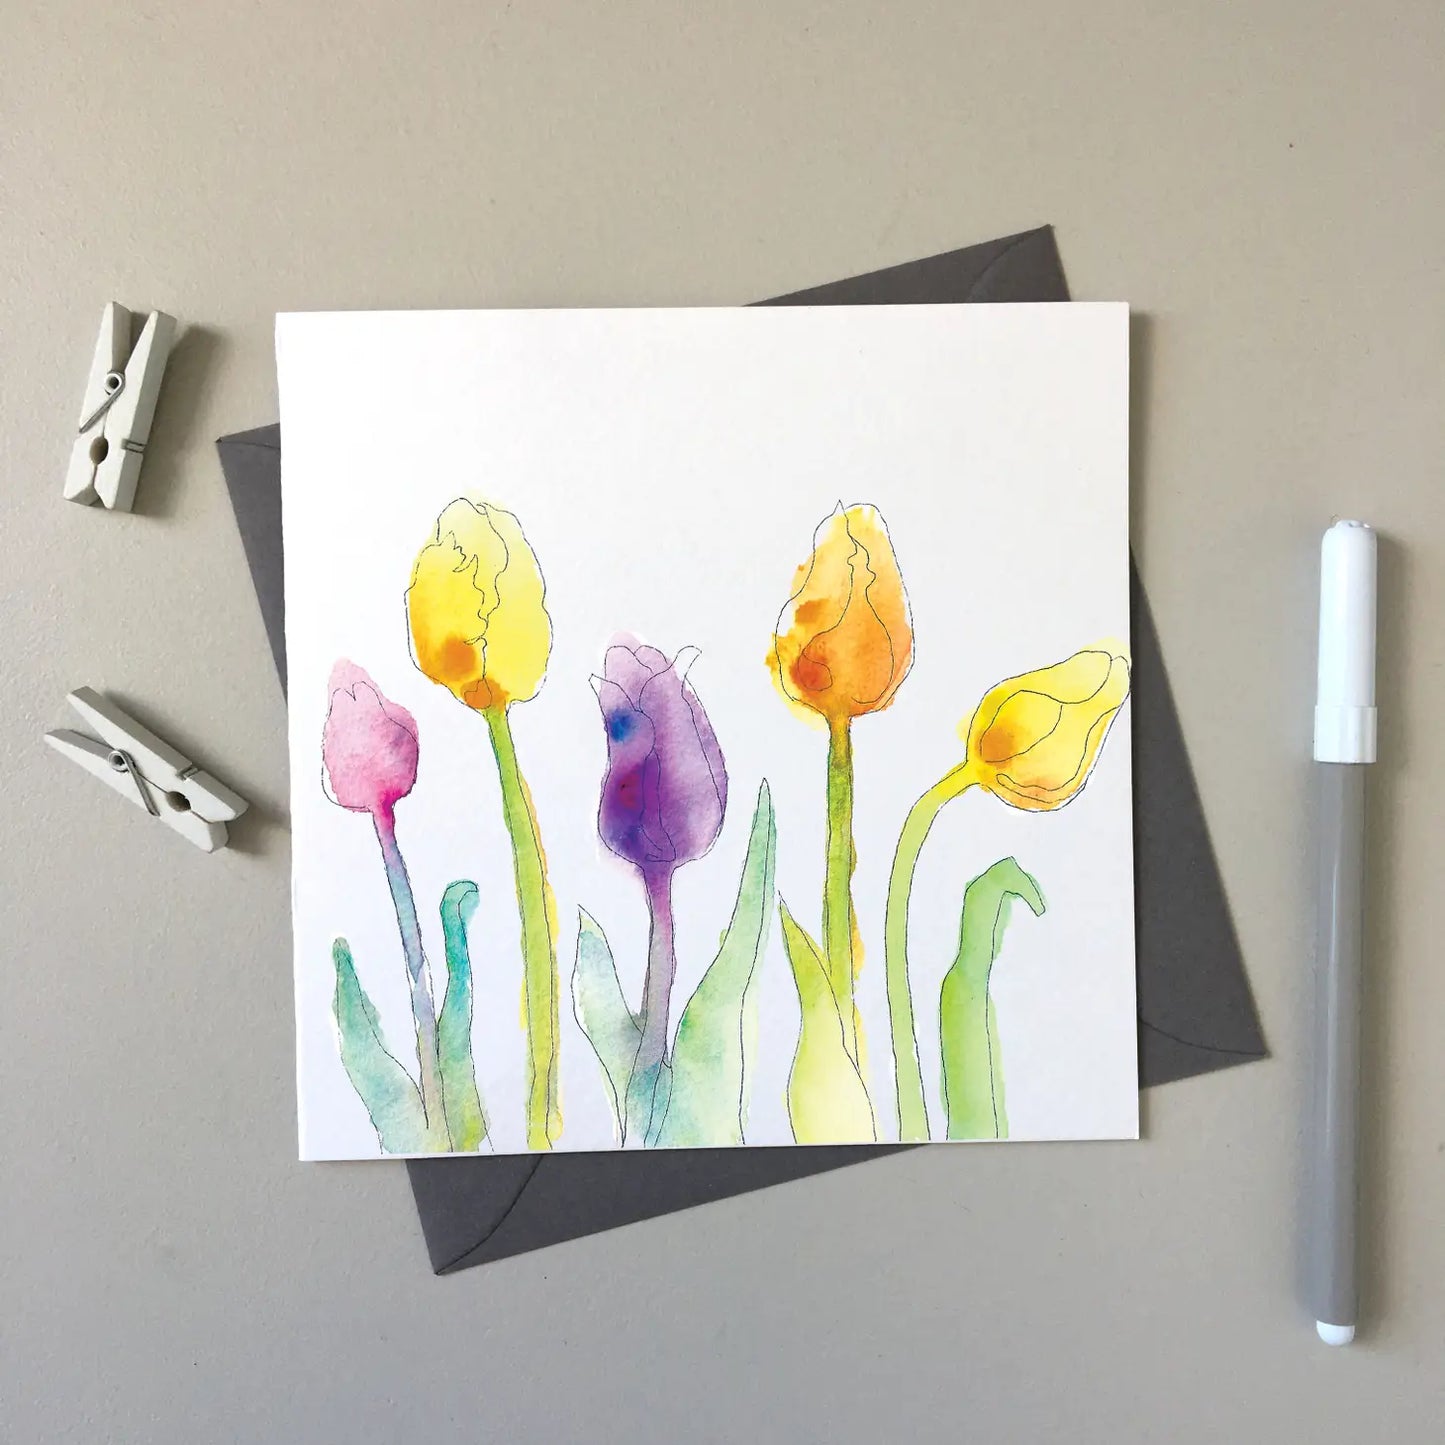 Beautiful watercolored tulips in yellow, purple and pink.